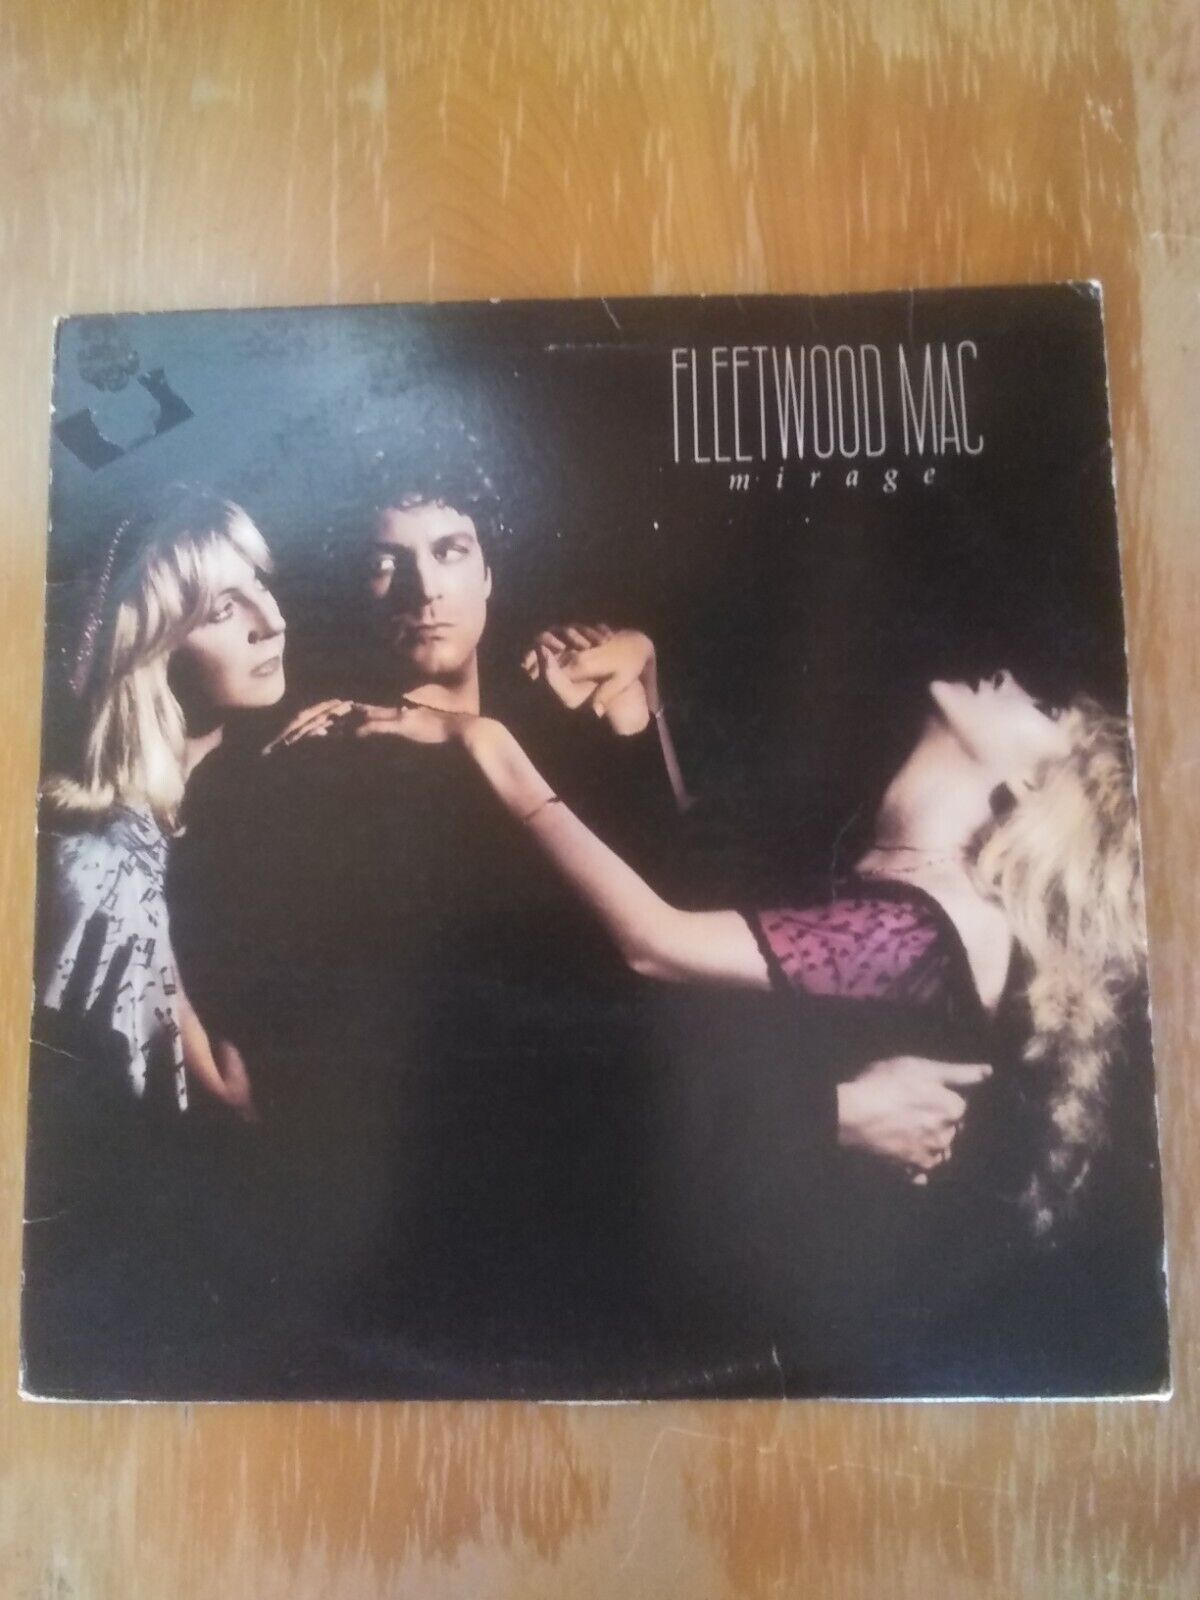 Fleetwood Mac-Mirage 1982 Press LP Album w/Lyrics 1-23607 Record Tested VG+/VG